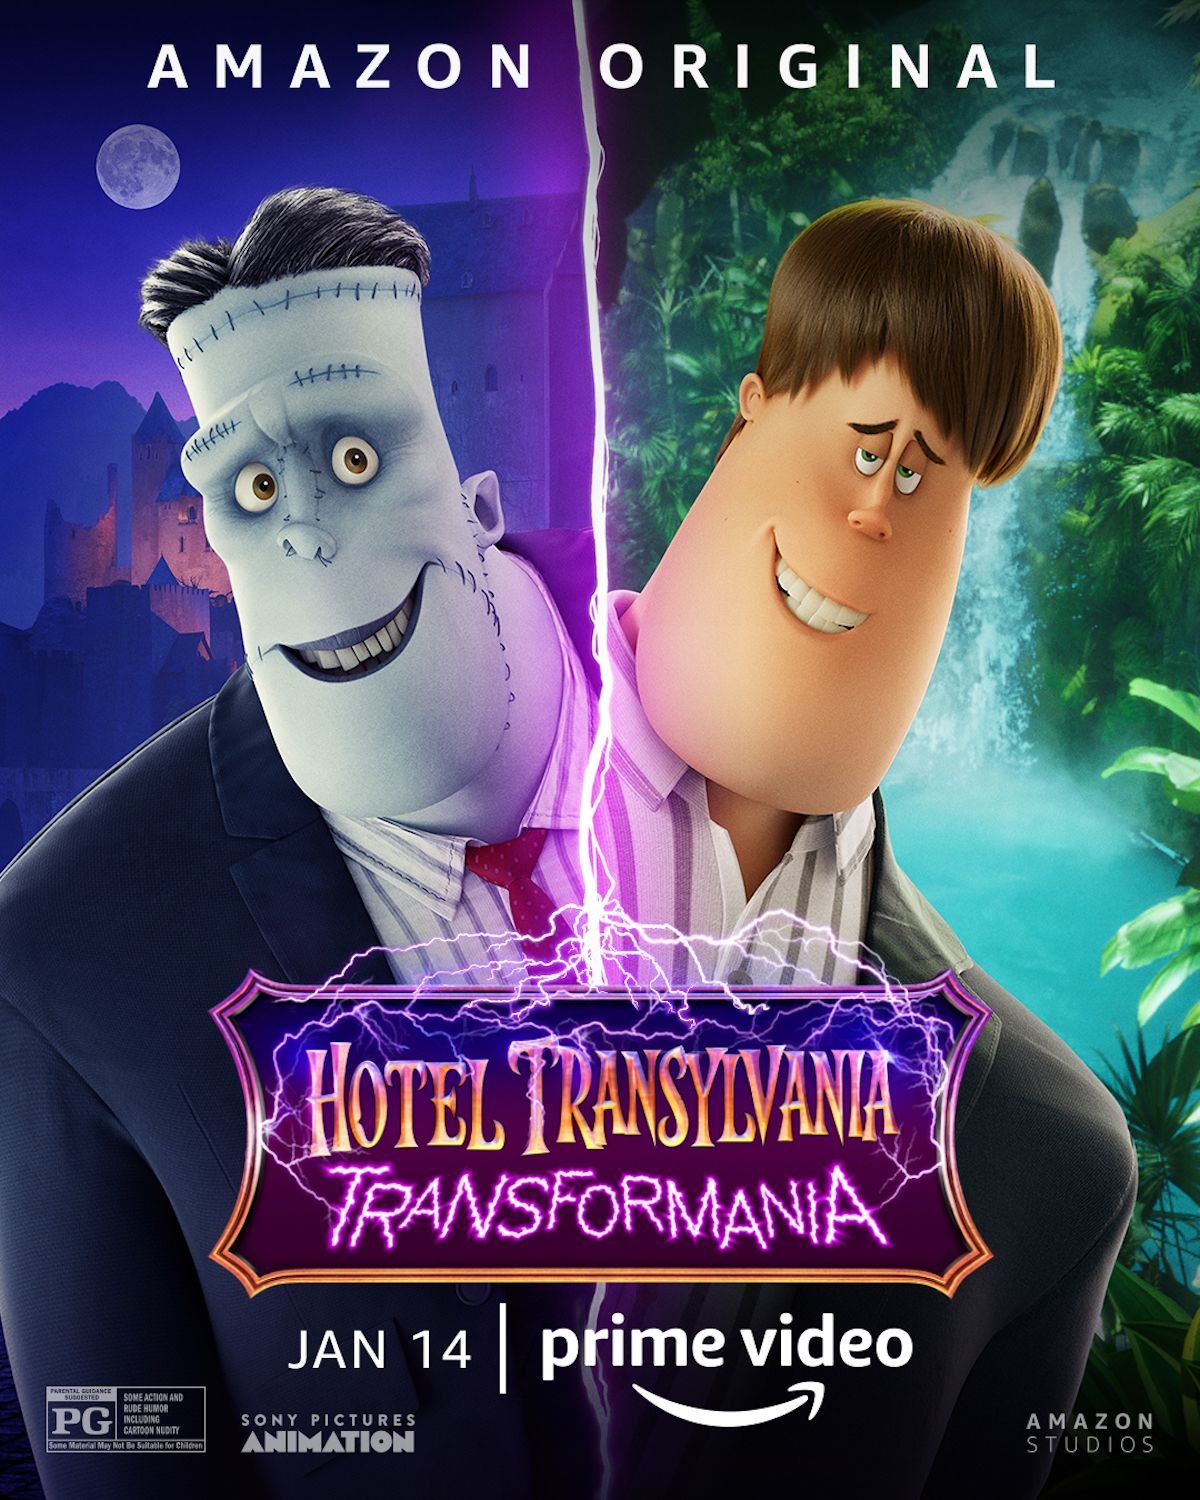 Extra Large Movie Poster Image for Hotel Transylvania: Transformania (#4 of 22)